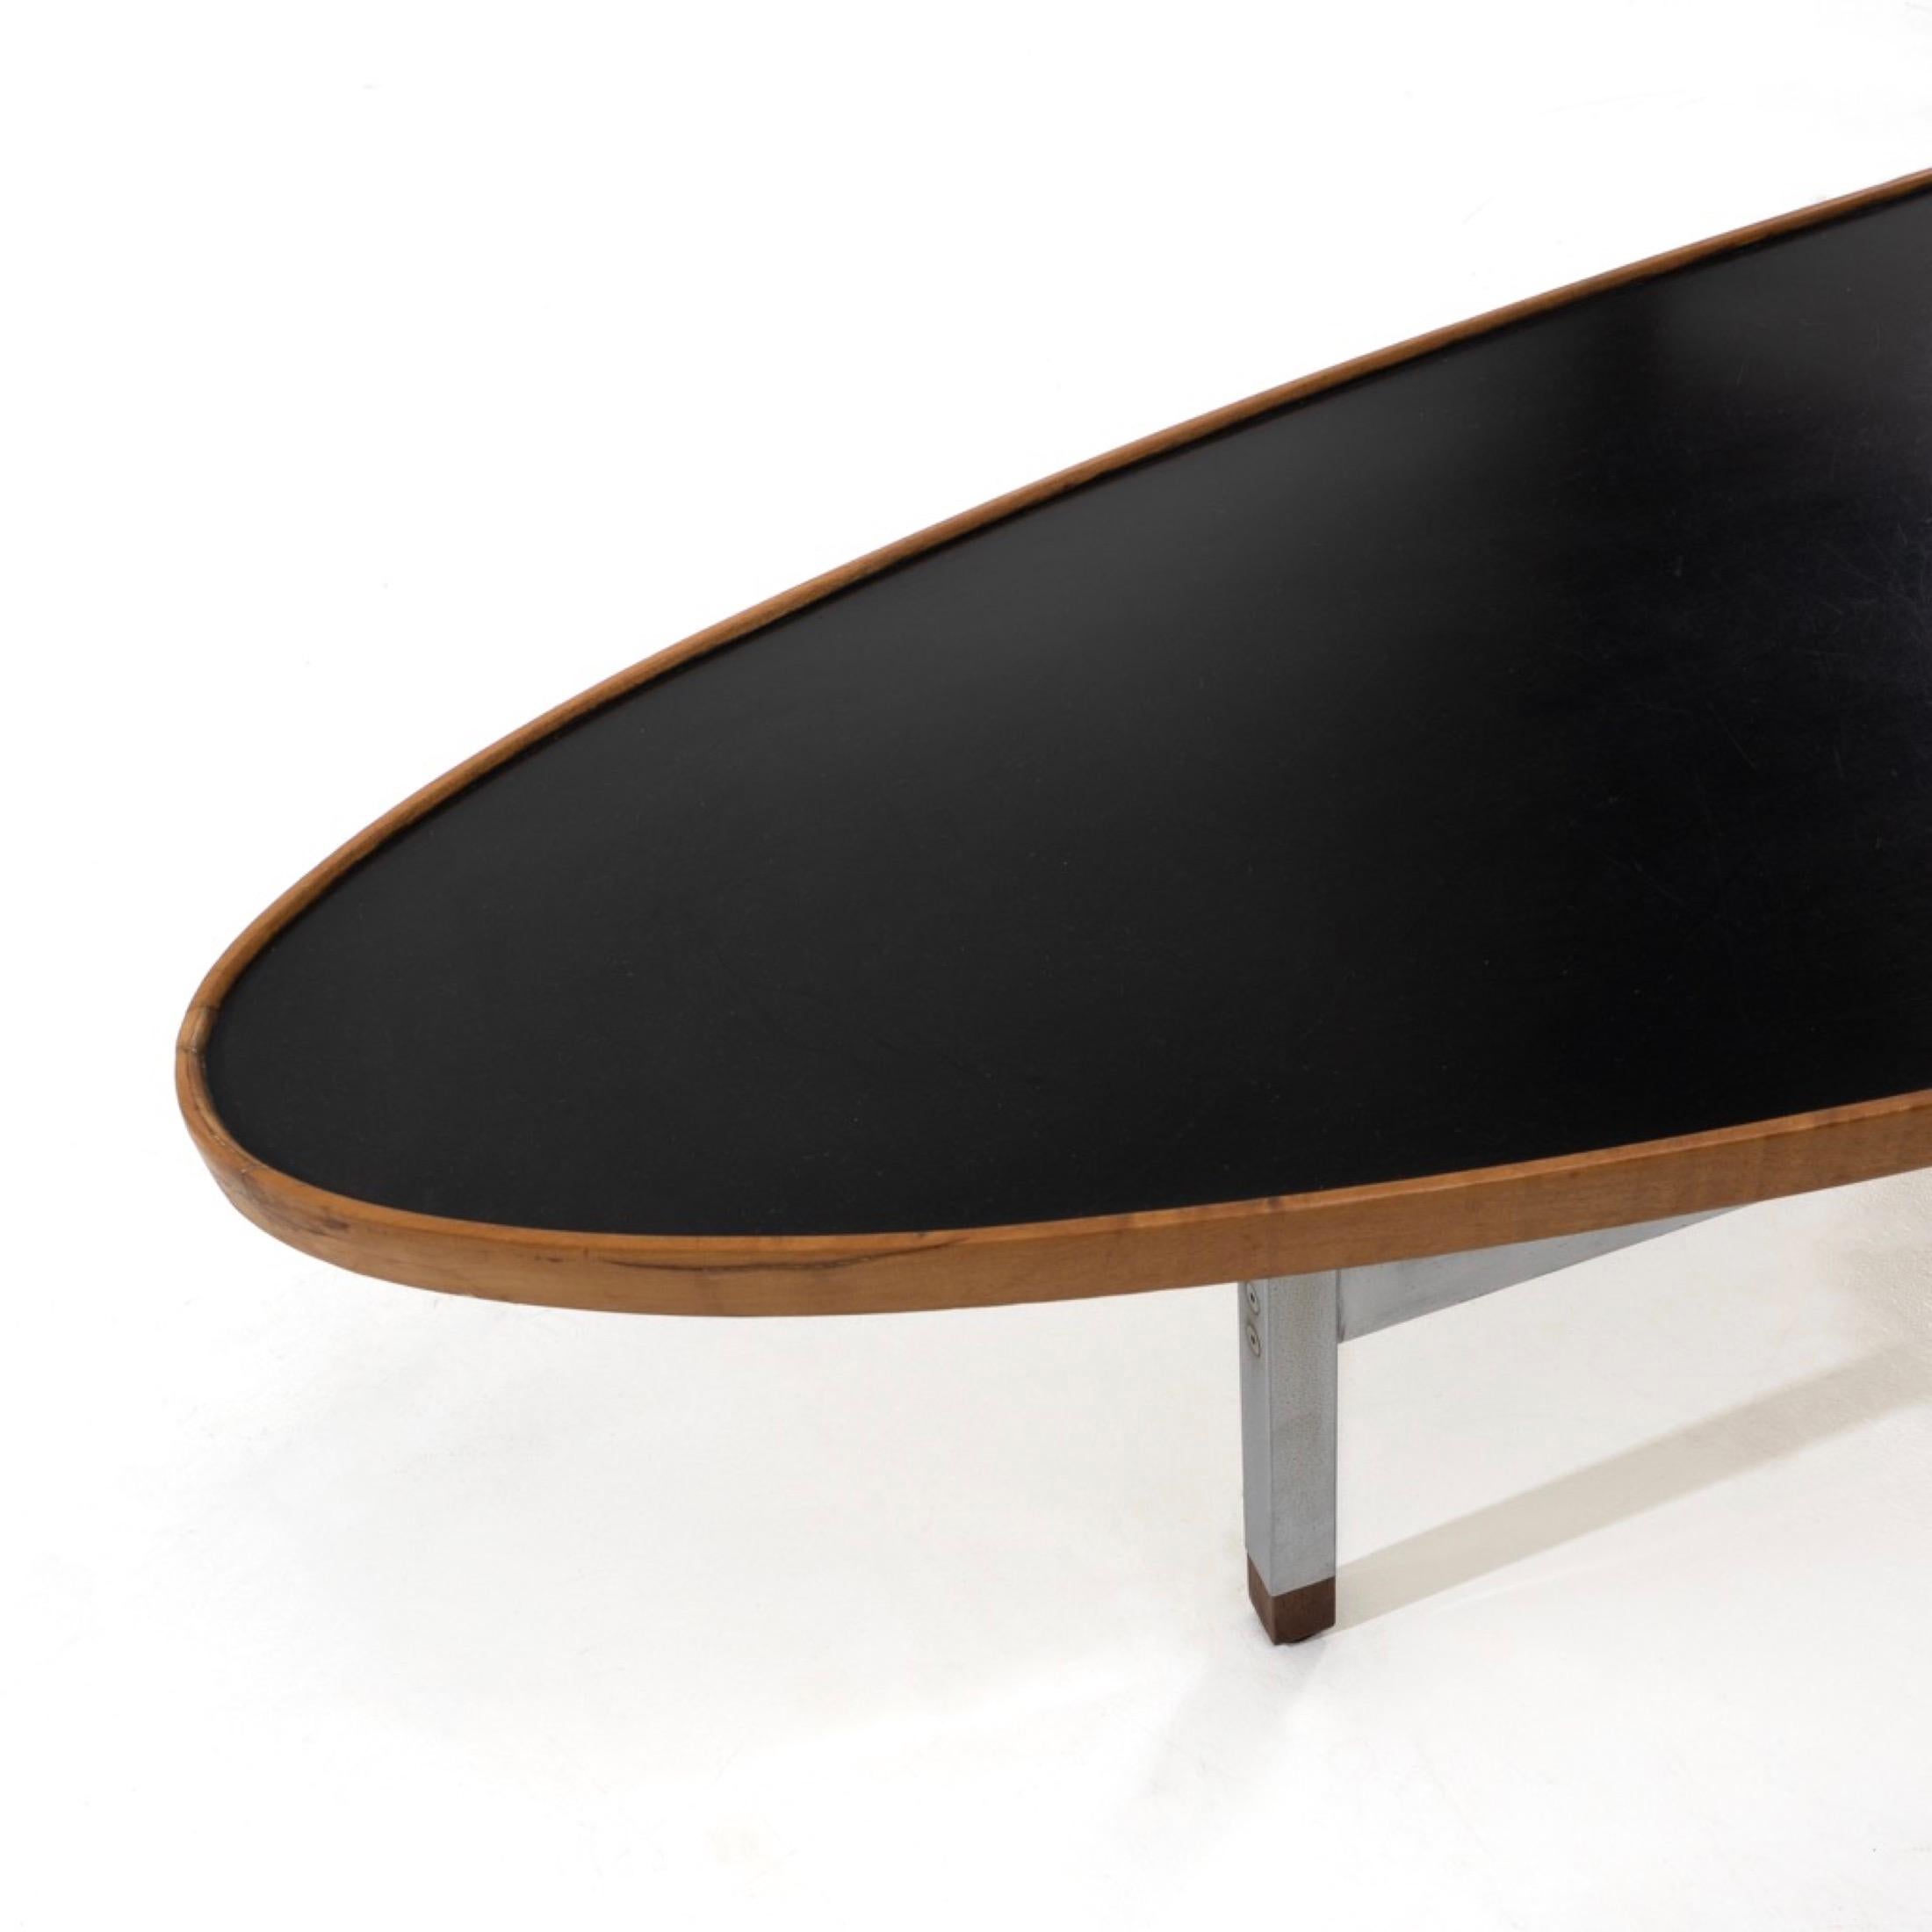 20th Century Elliptical coffee table by Edward Wormley for Dunbar For Sale